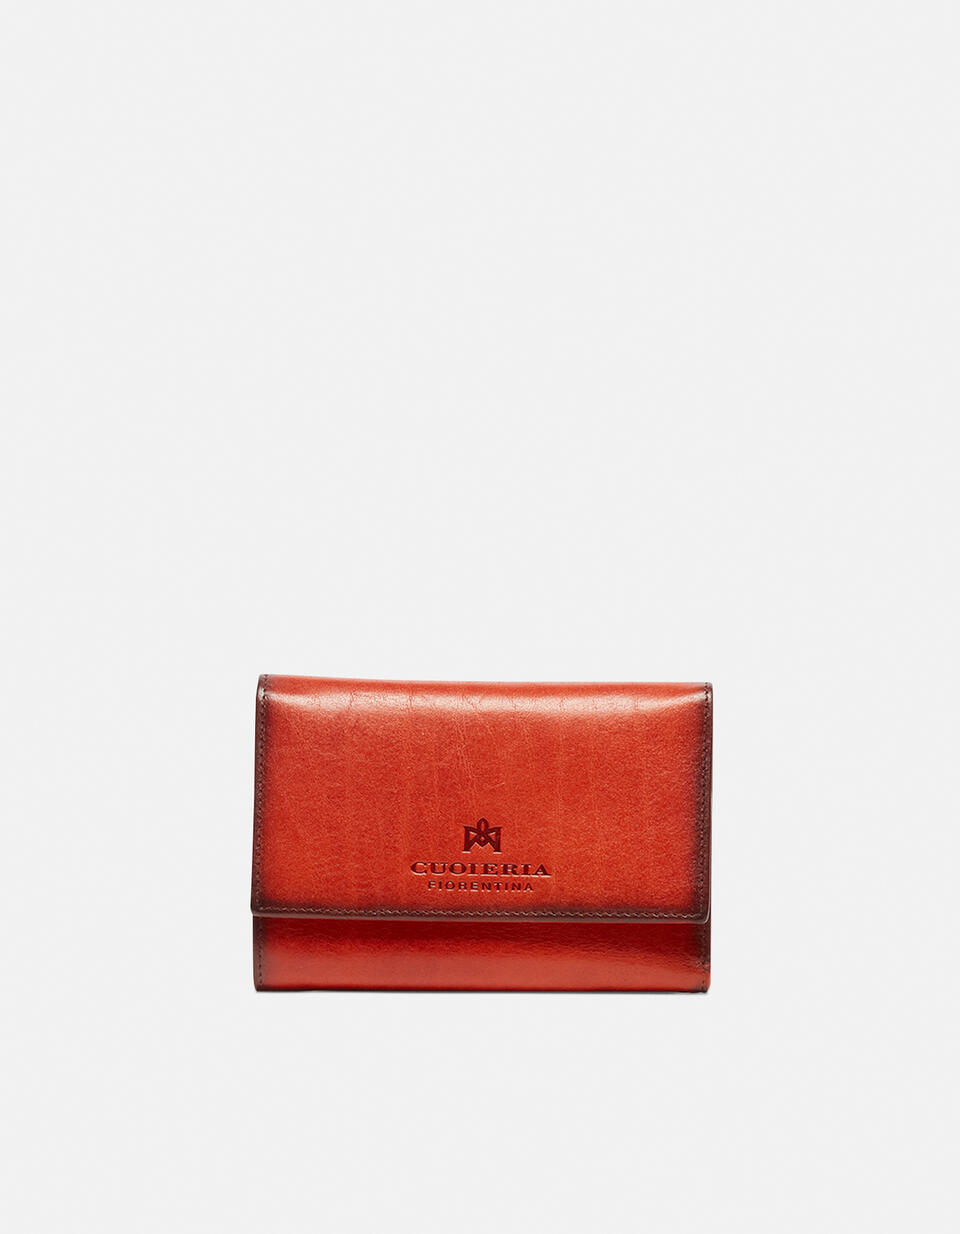 Bifold wallet with side burnt effect - Women's Wallets - Women's Wallets | Wallets ARANCIO - Women's Wallets - Women's Wallets | WalletsCuoieria Fiorentina